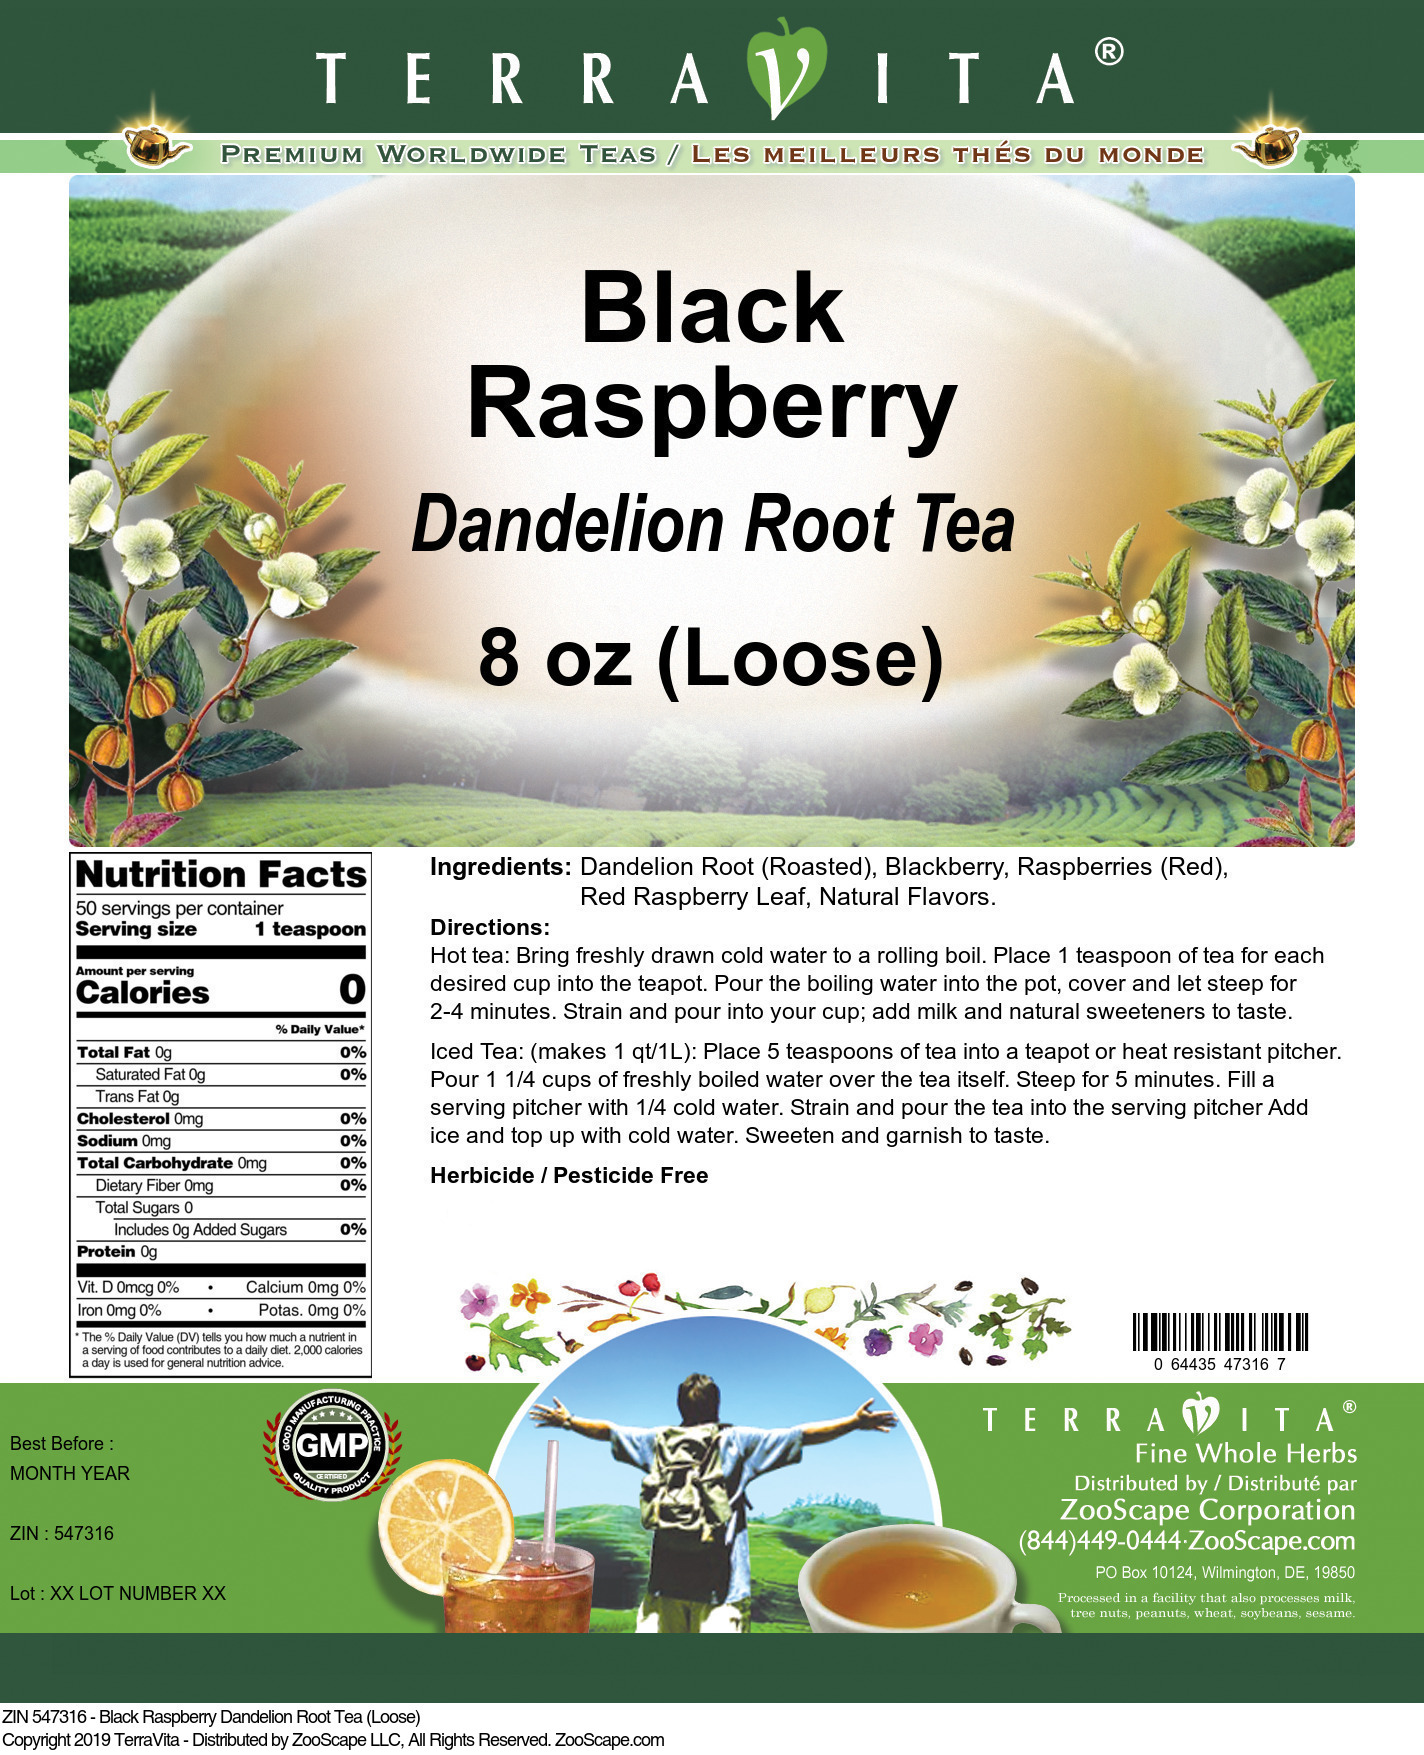 Black Raspberry Dandelion Root Tea (Loose) - Label